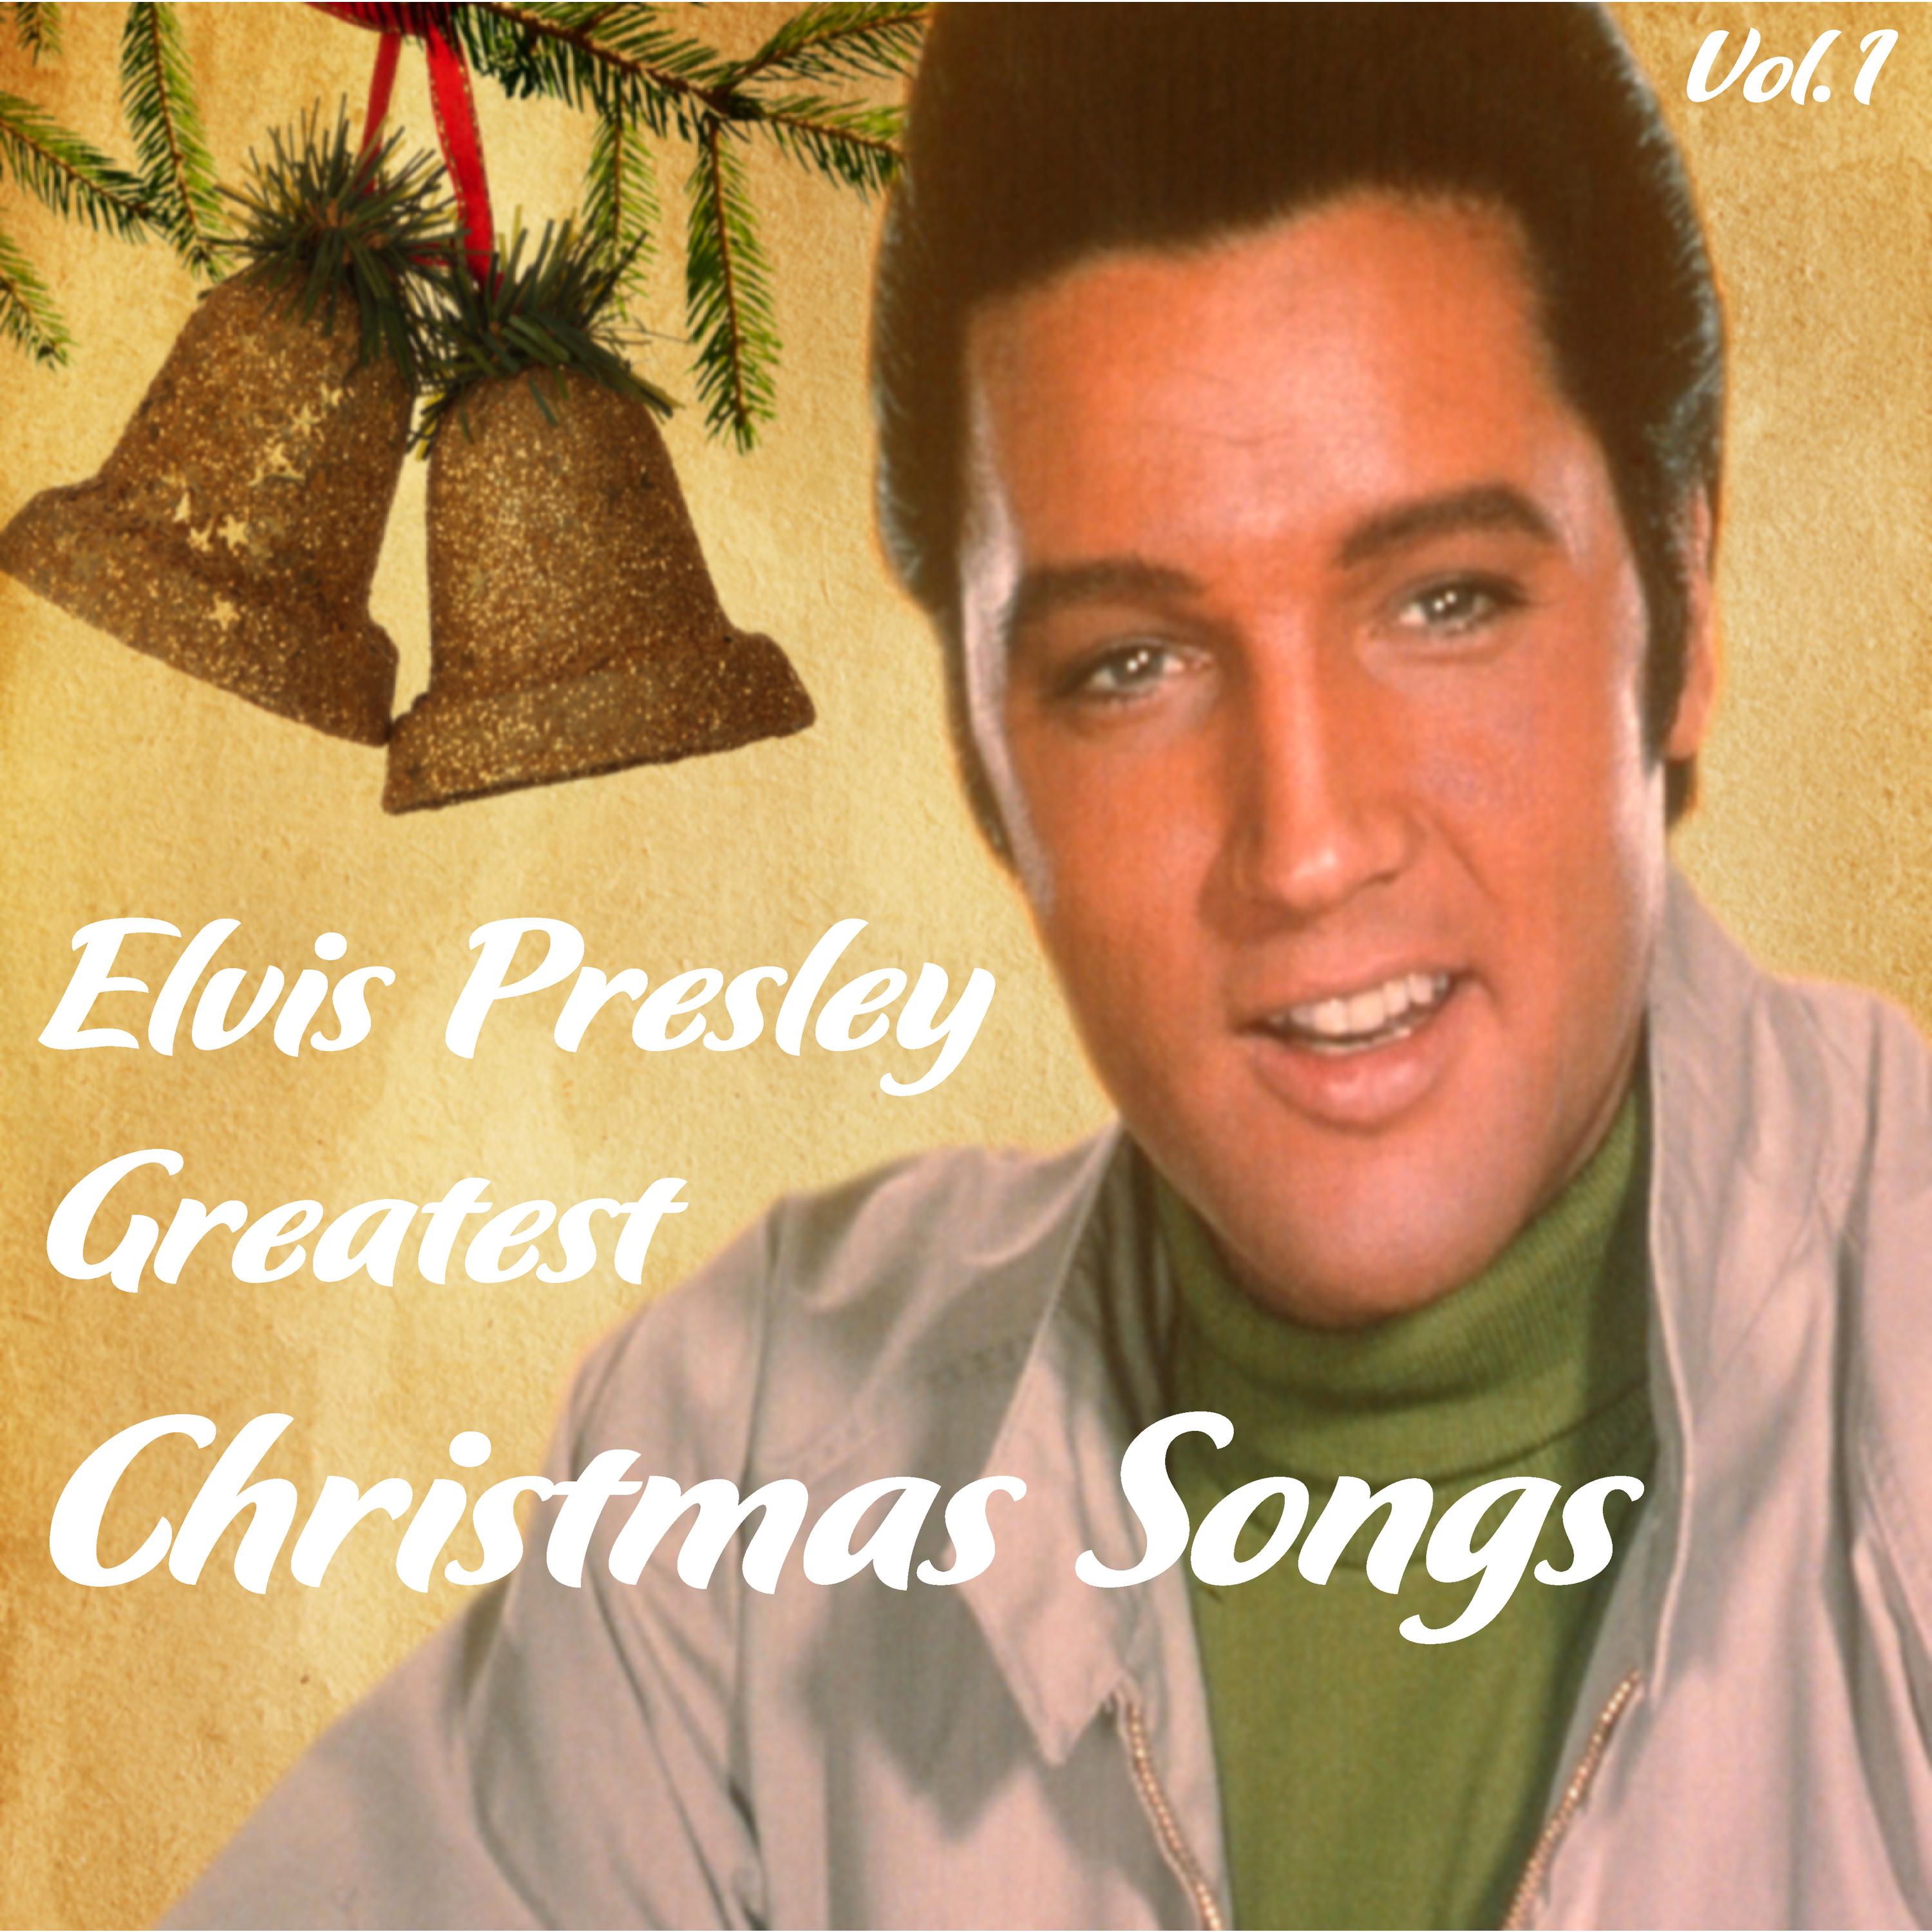 Greatest Christmas Songs, Vol.1